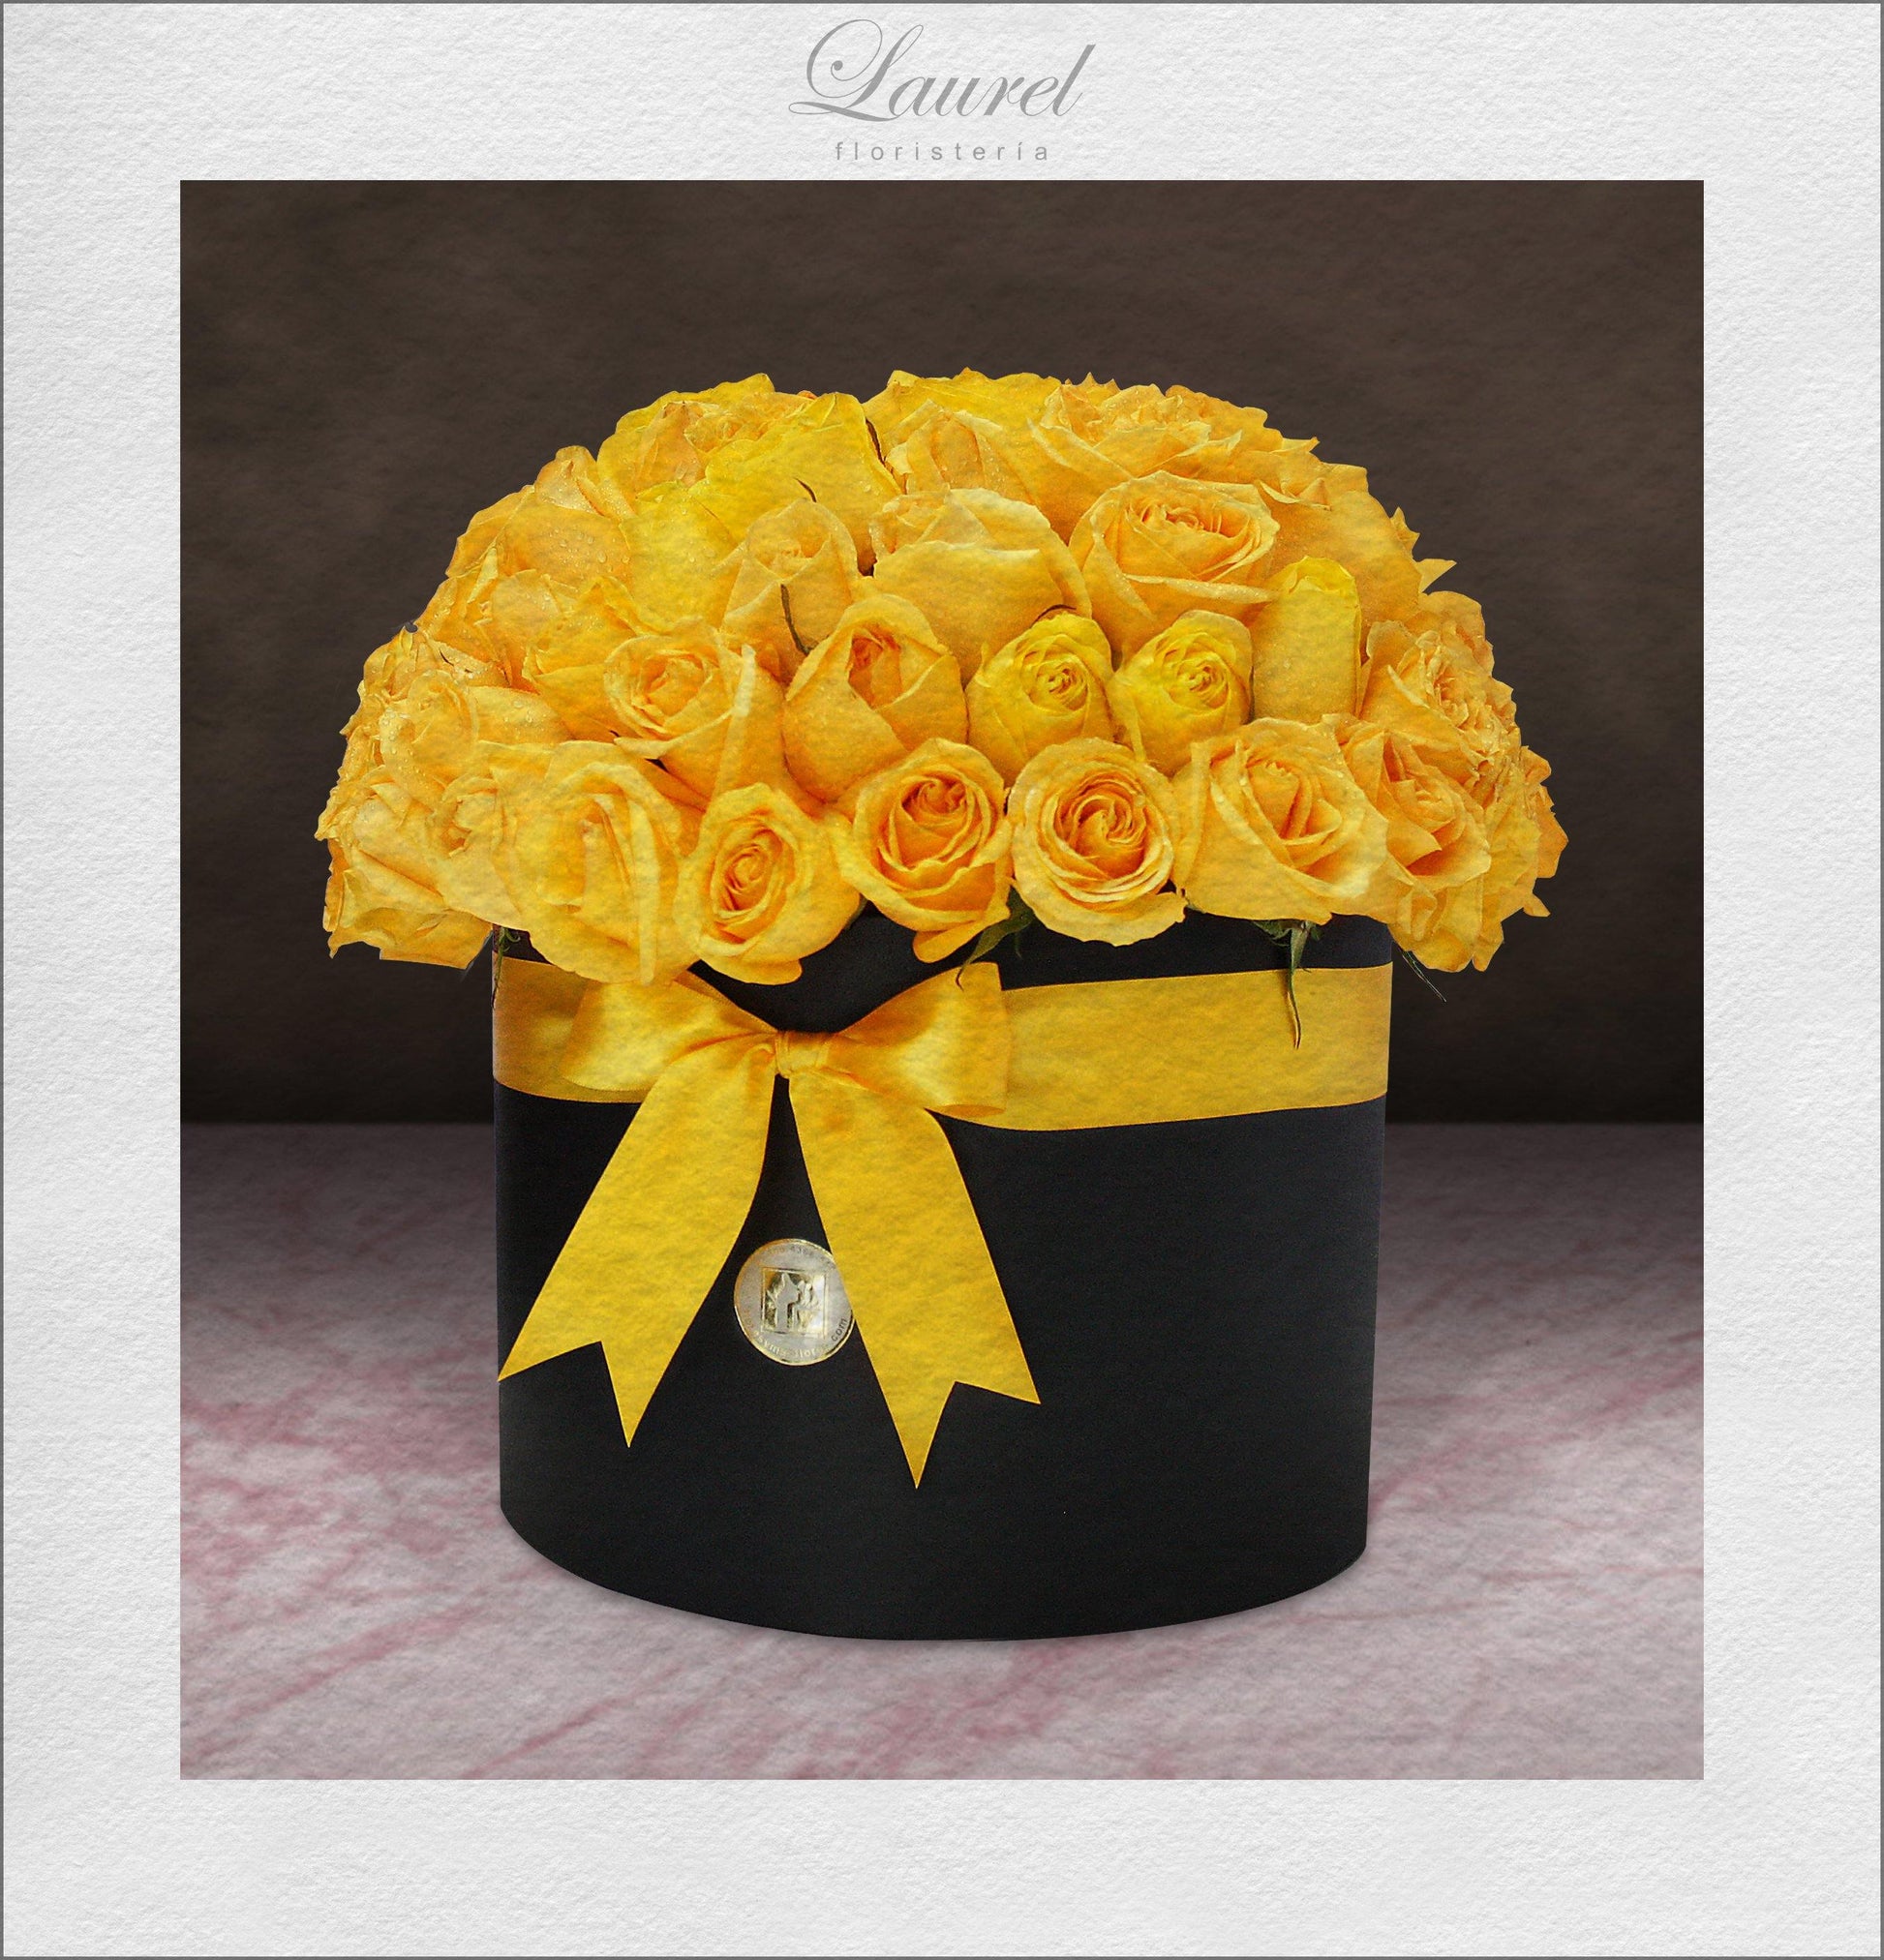 Espectacular Bouquet de rosas Premium| JULIE - Envío de Arreglos florales Laurel Floristería